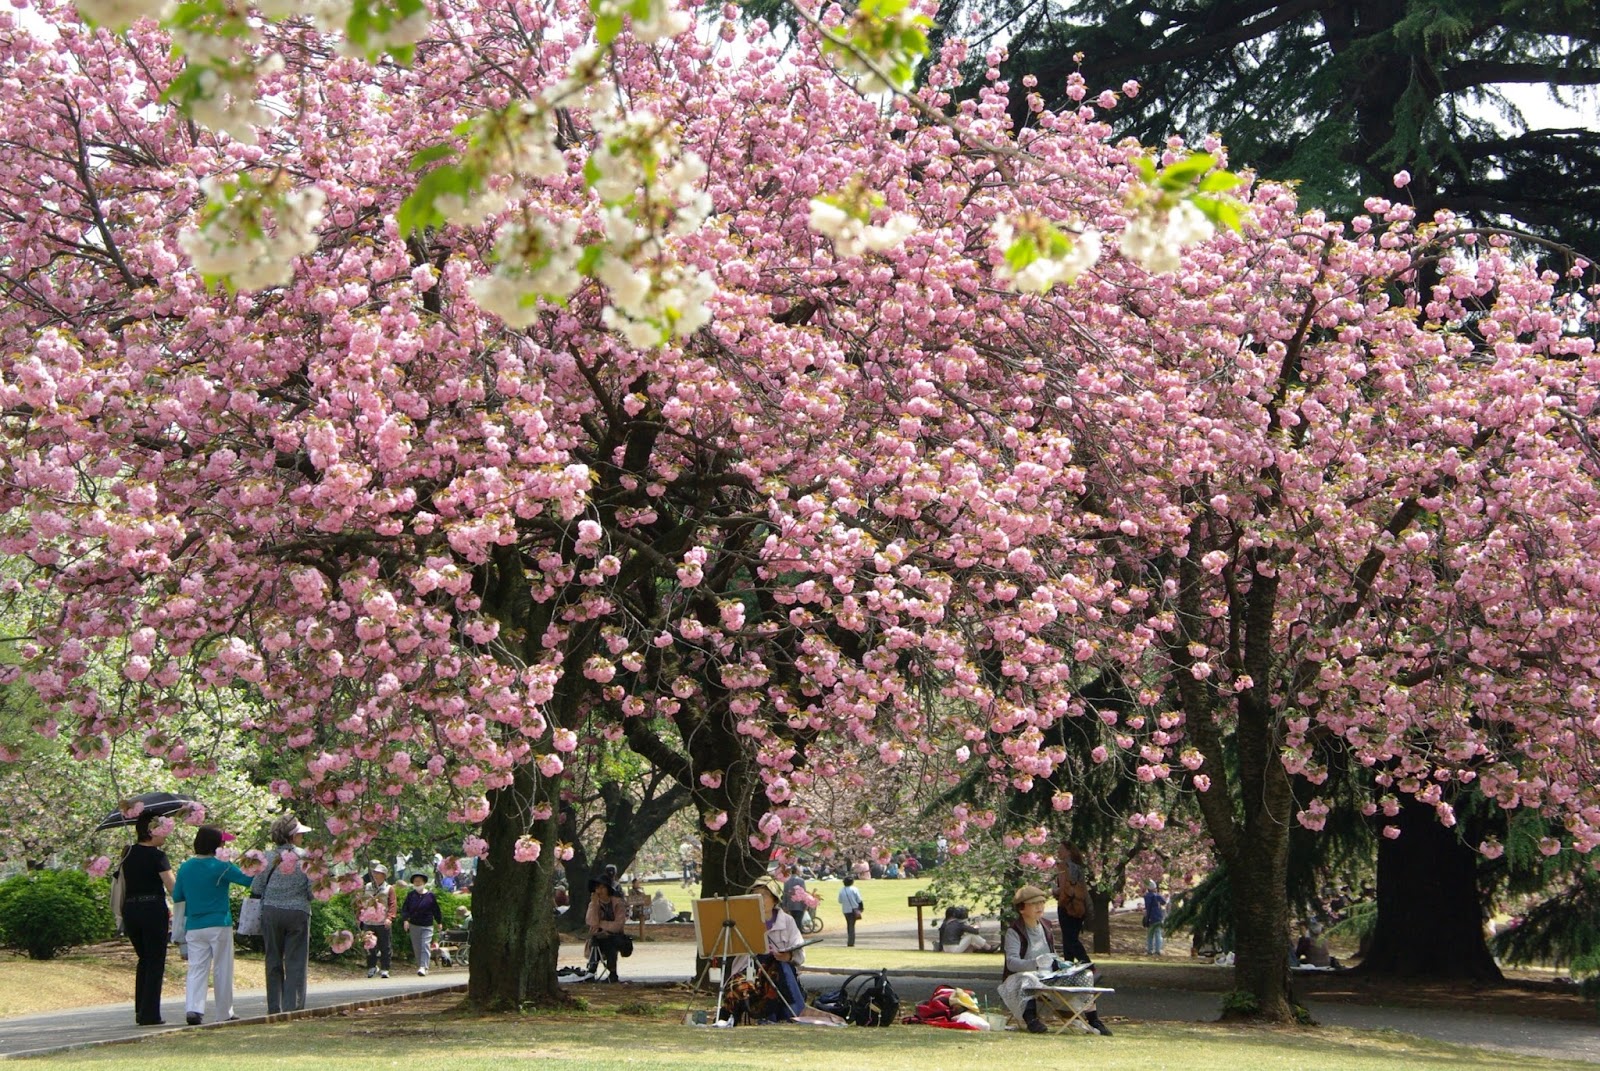  Gambar  Keindahan Bunga  Sakura  di Jepang Taman taman indah  